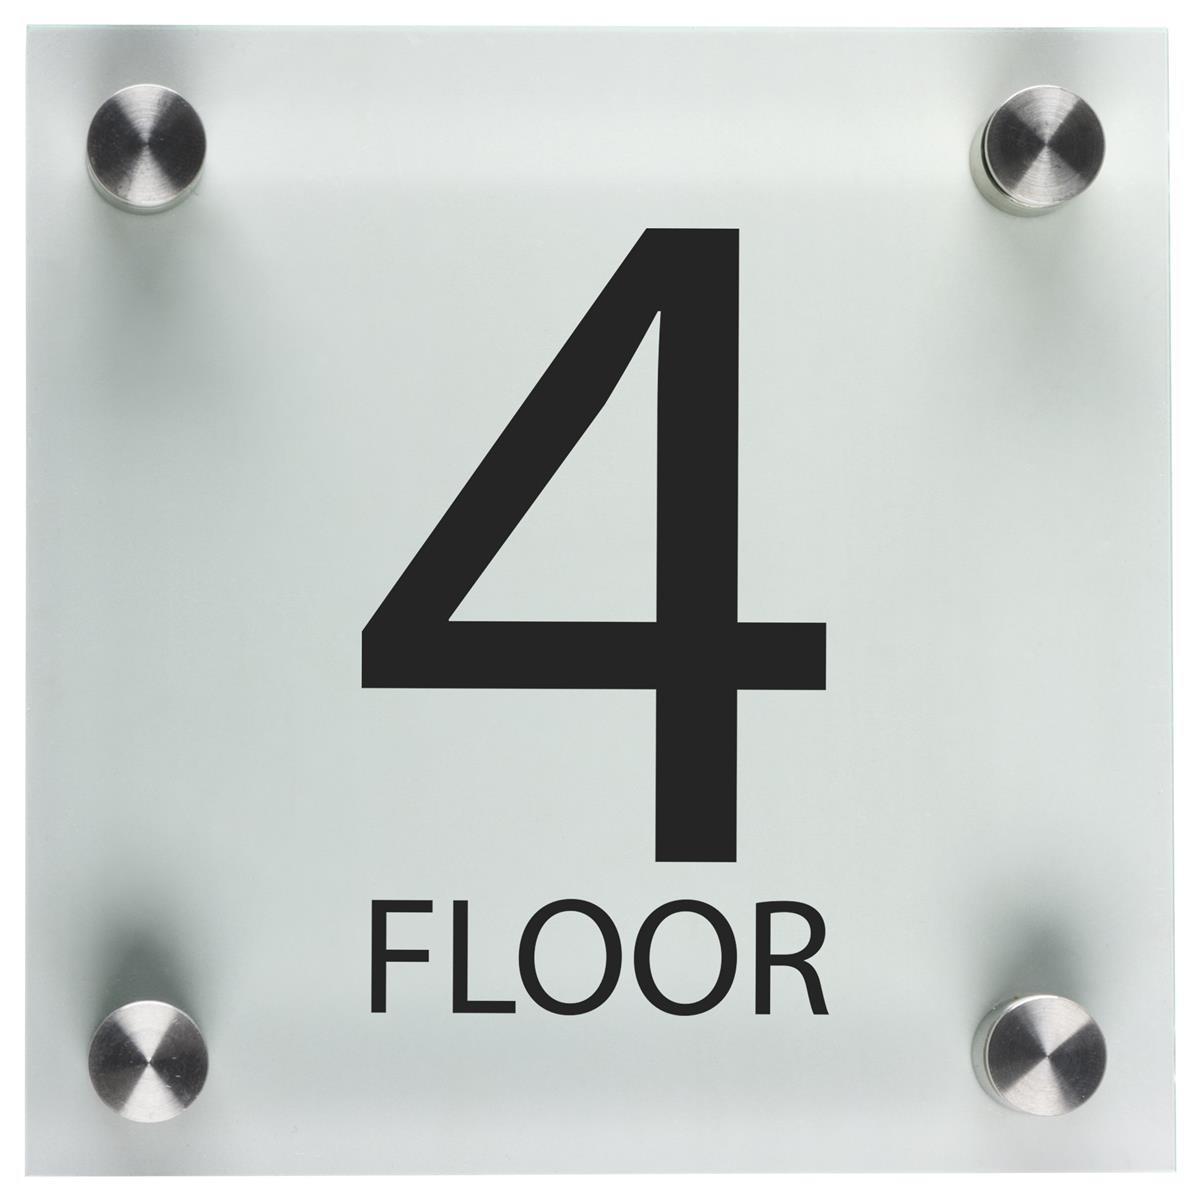 Acrylic Floor Level Sign